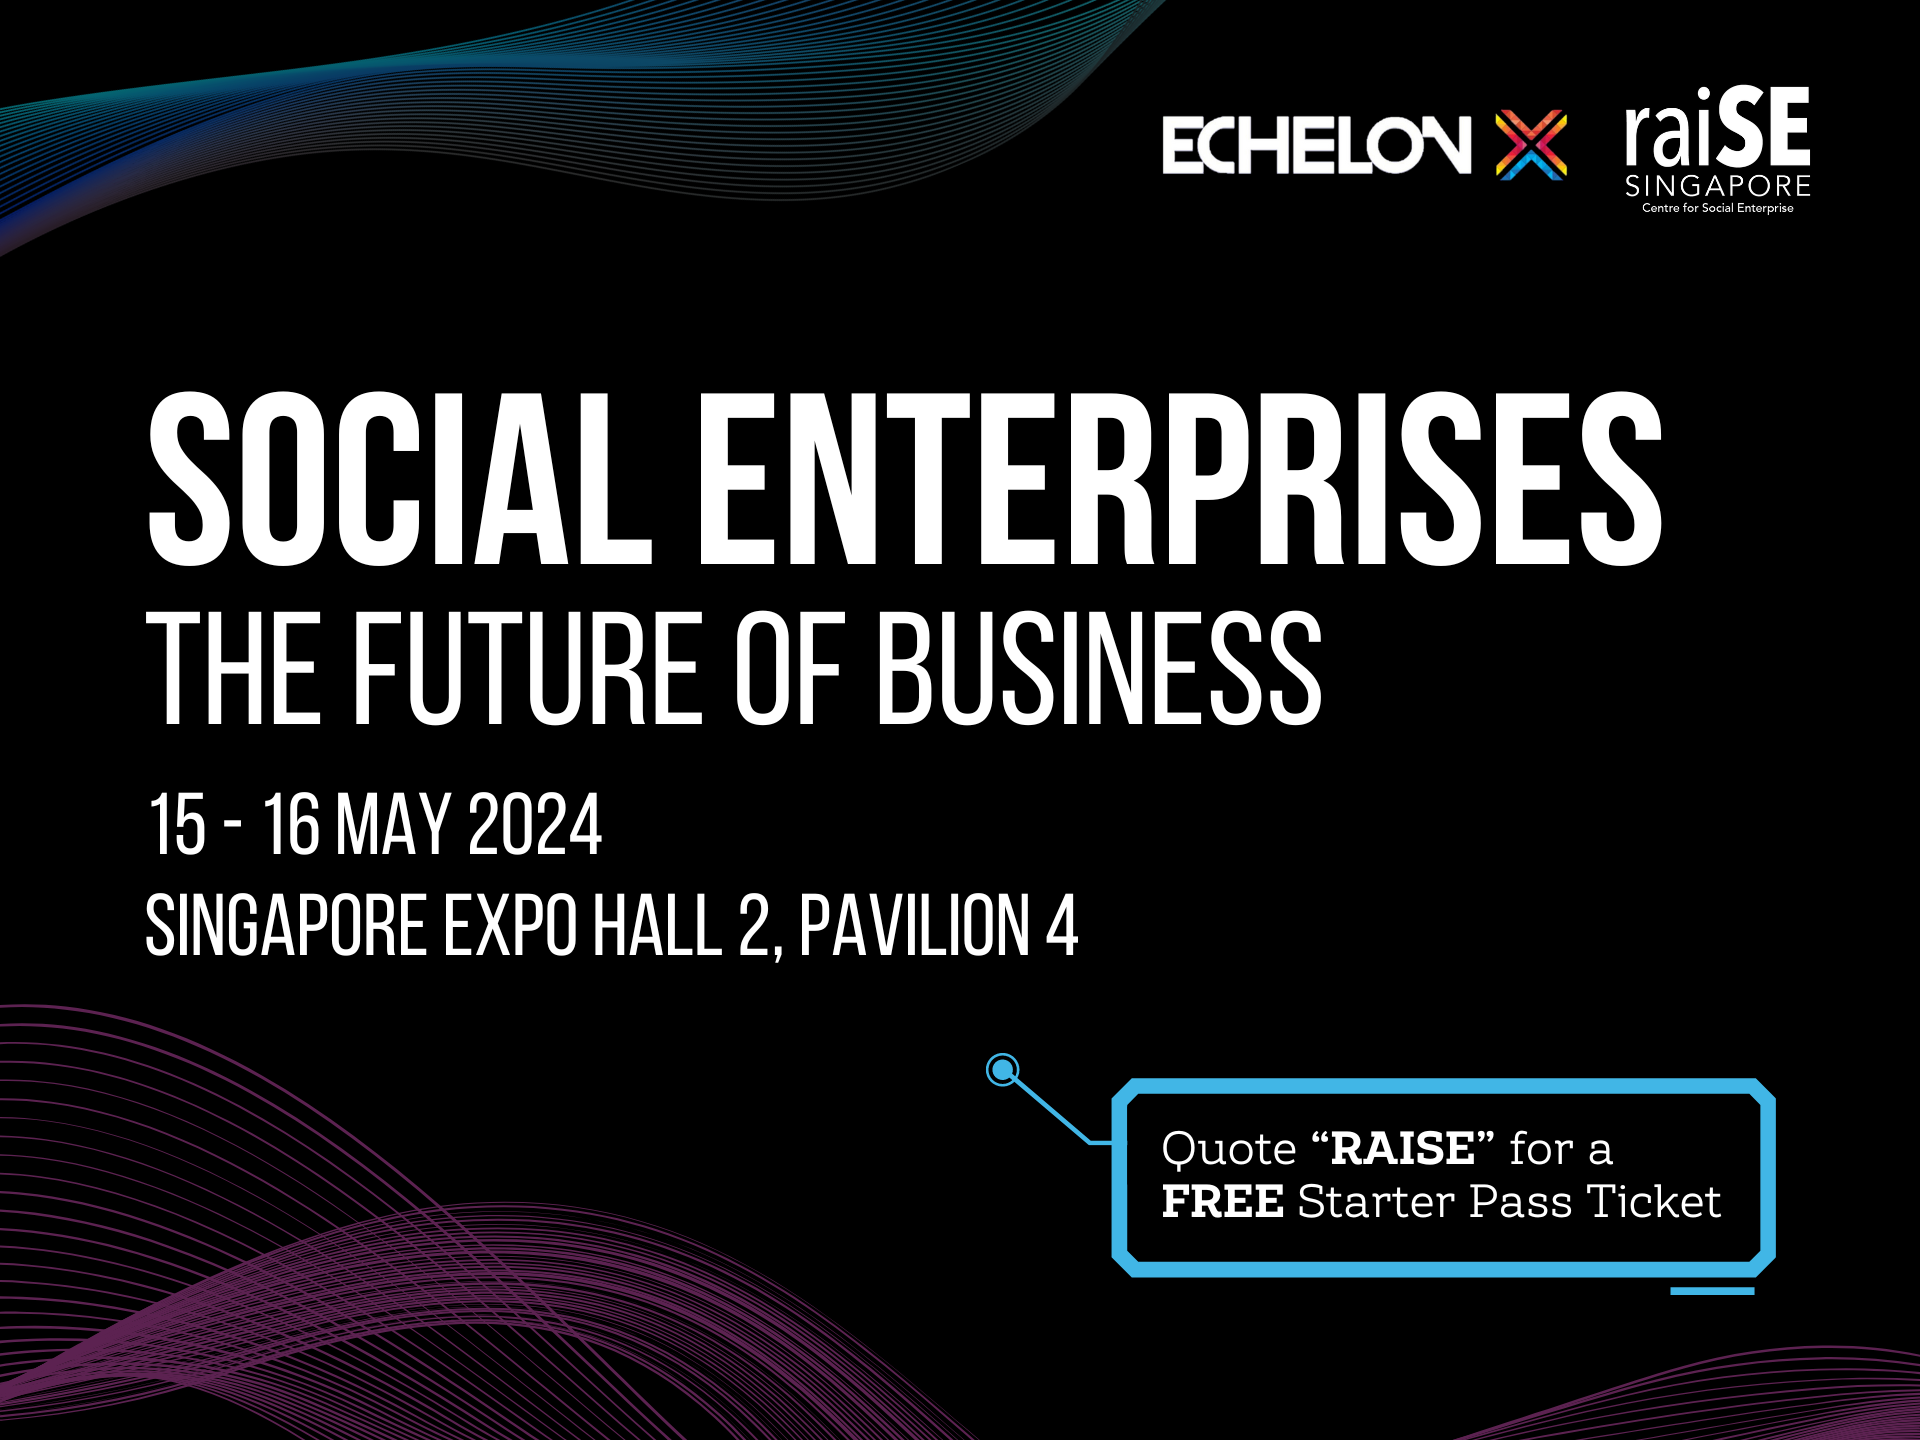 echelon_raise_image Event - Inclusive Design for Business Growth Workshop